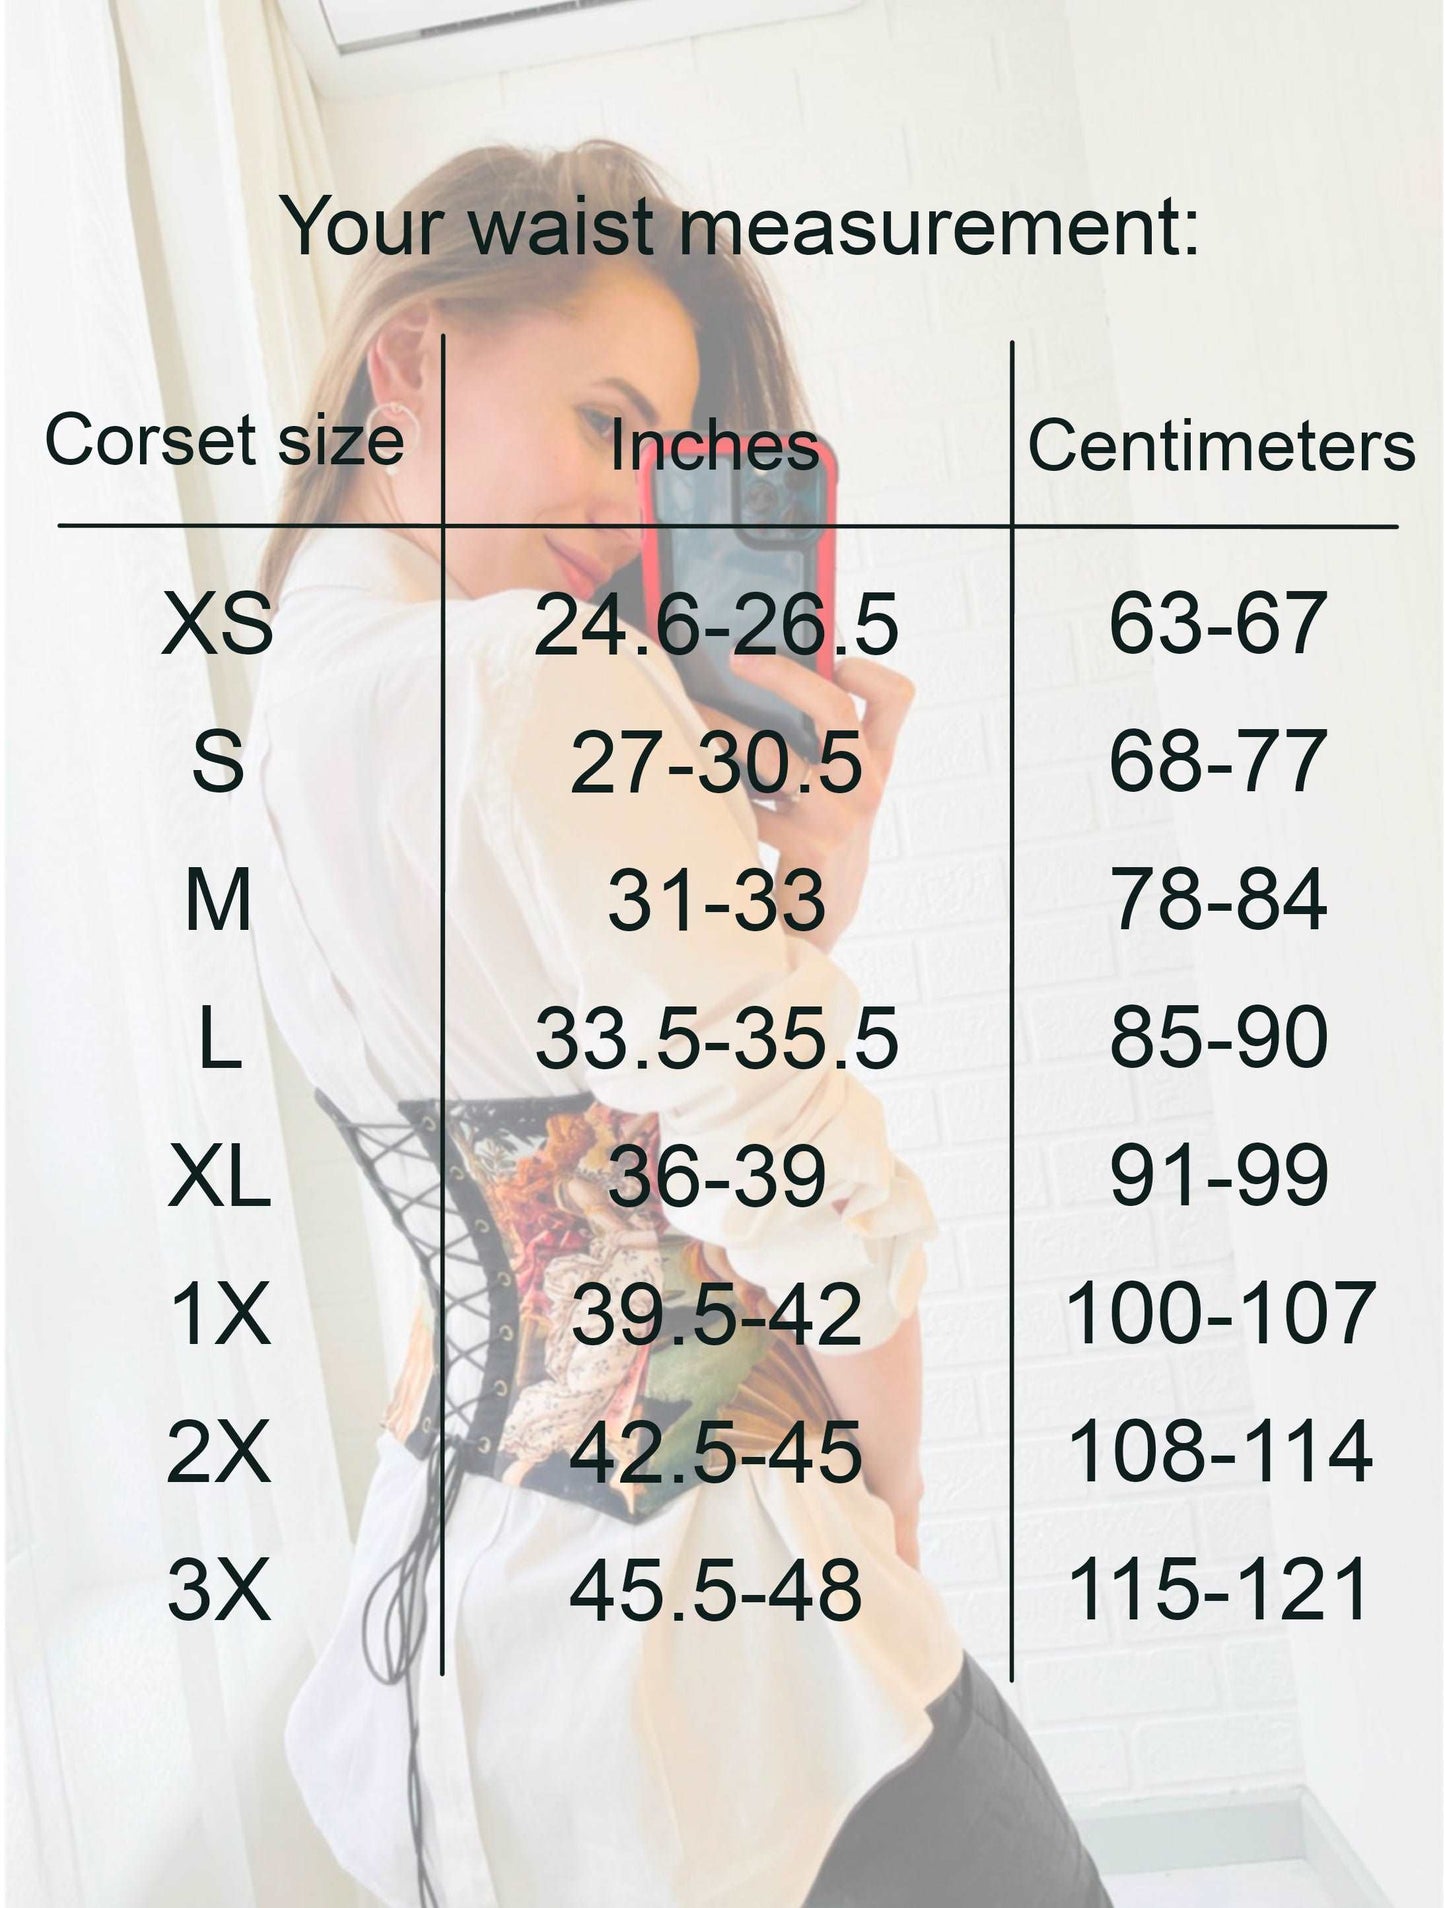 Corset size chart with waist measurements